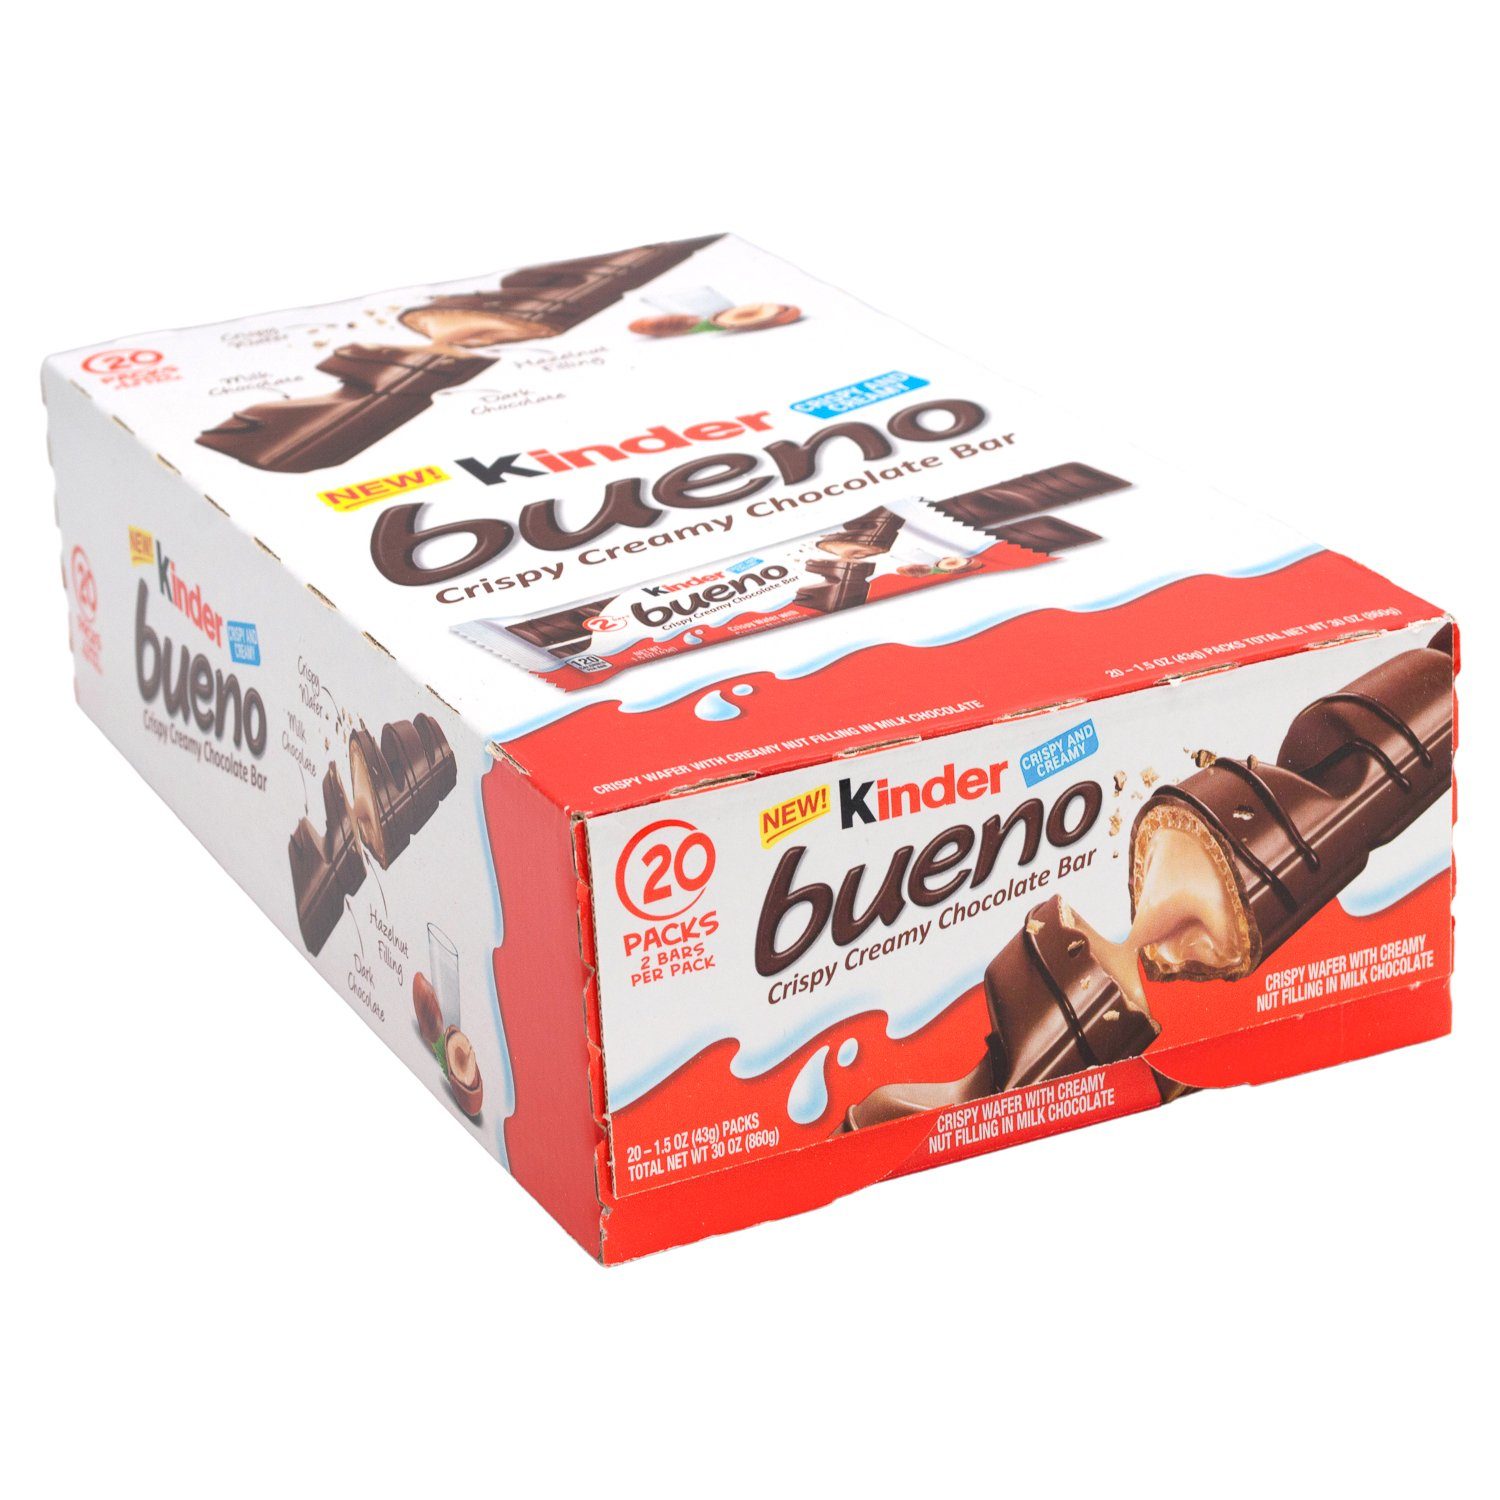 Kinder Bueno Crispy Creamy Chocolate Meltable Kinder Original 1.5 Oz-20 Count 